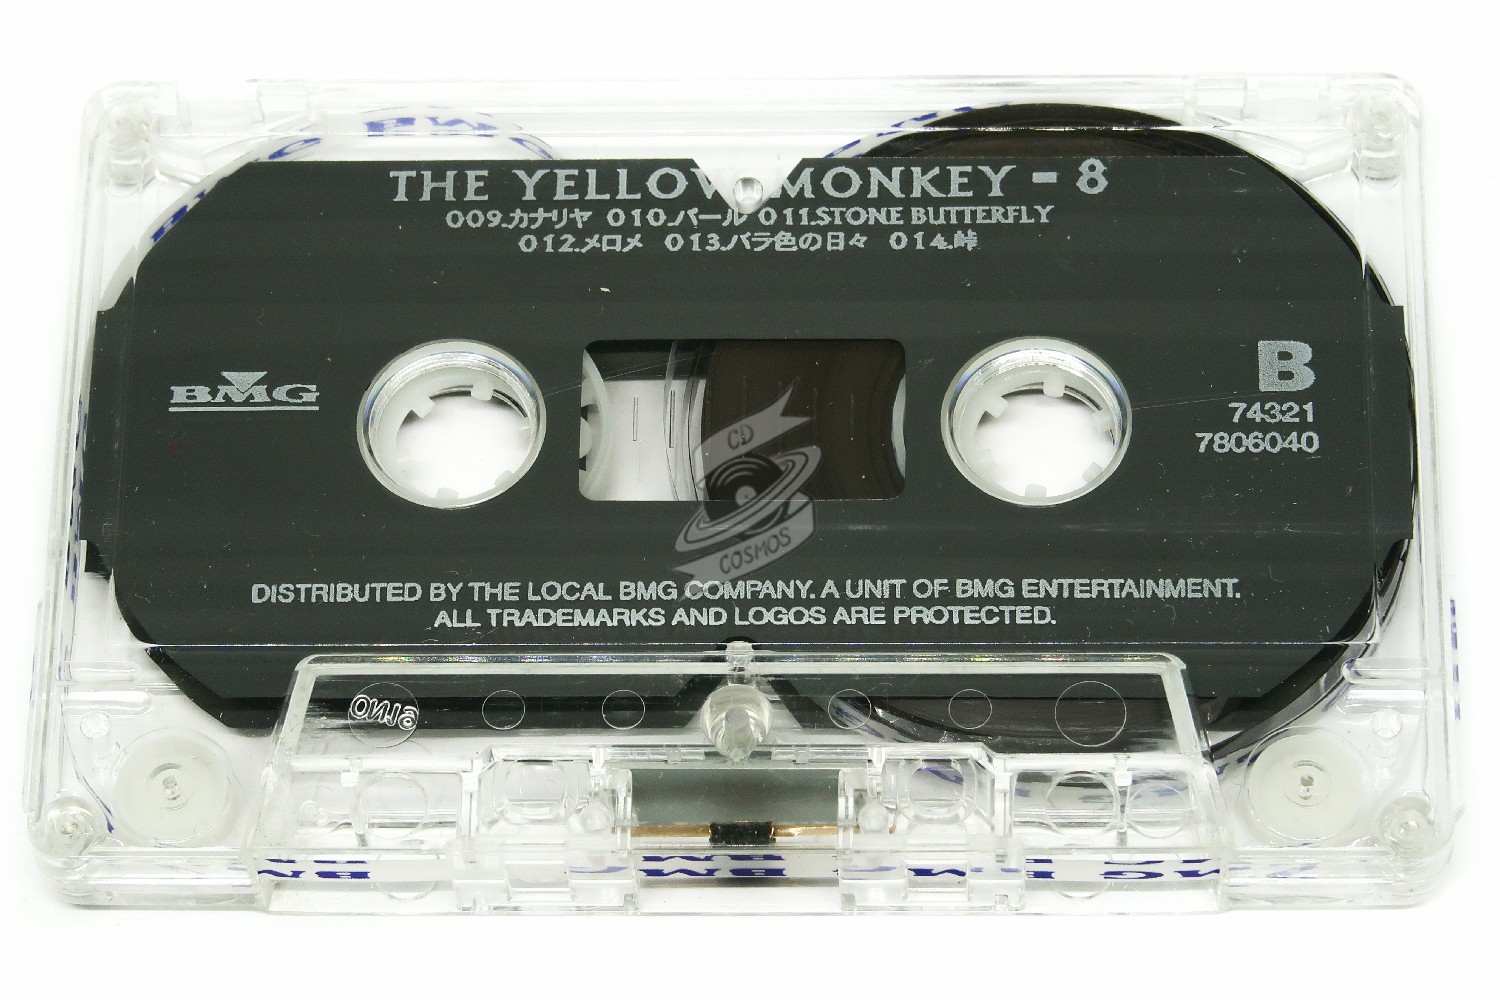 The Yellow Monkey - 8